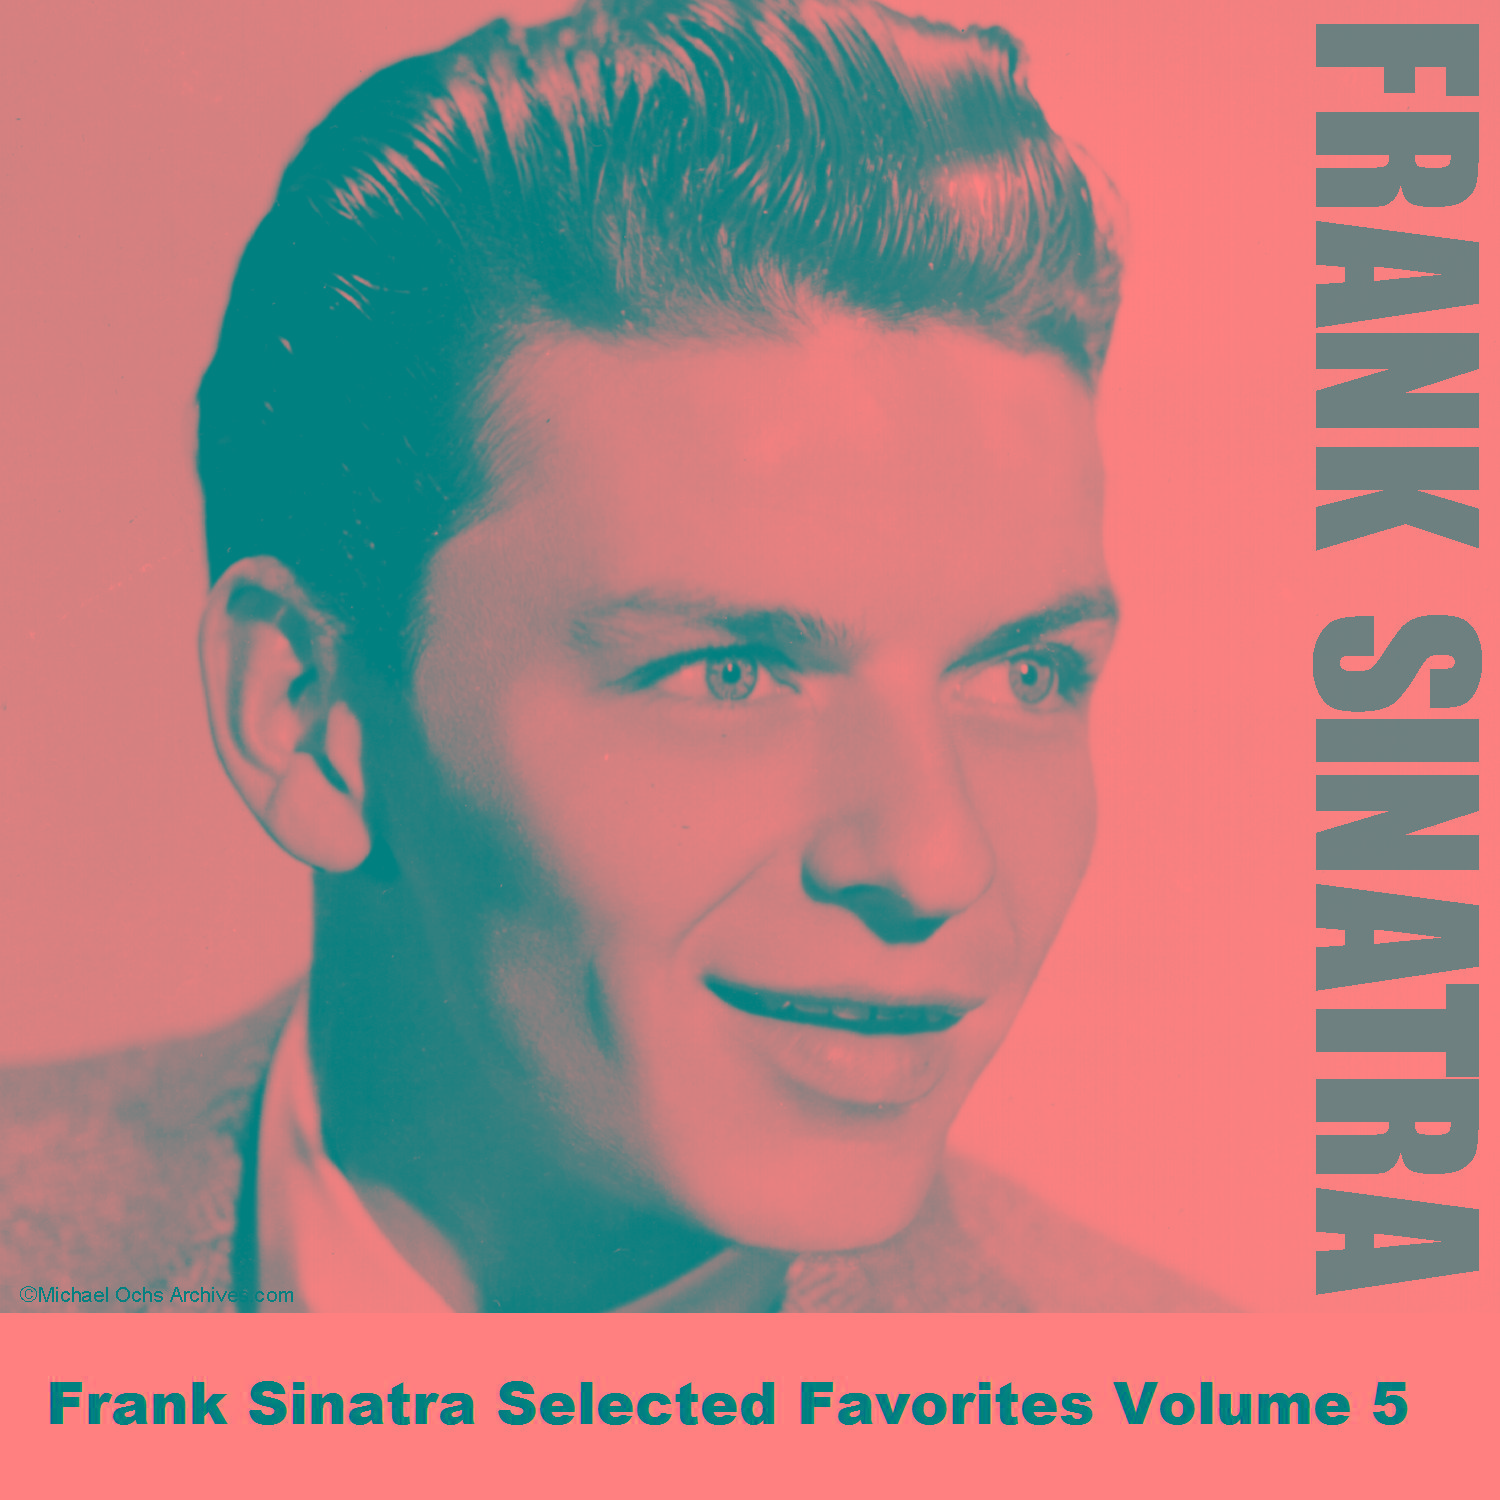 Frank Sinatra Selected Favorites Volume 5